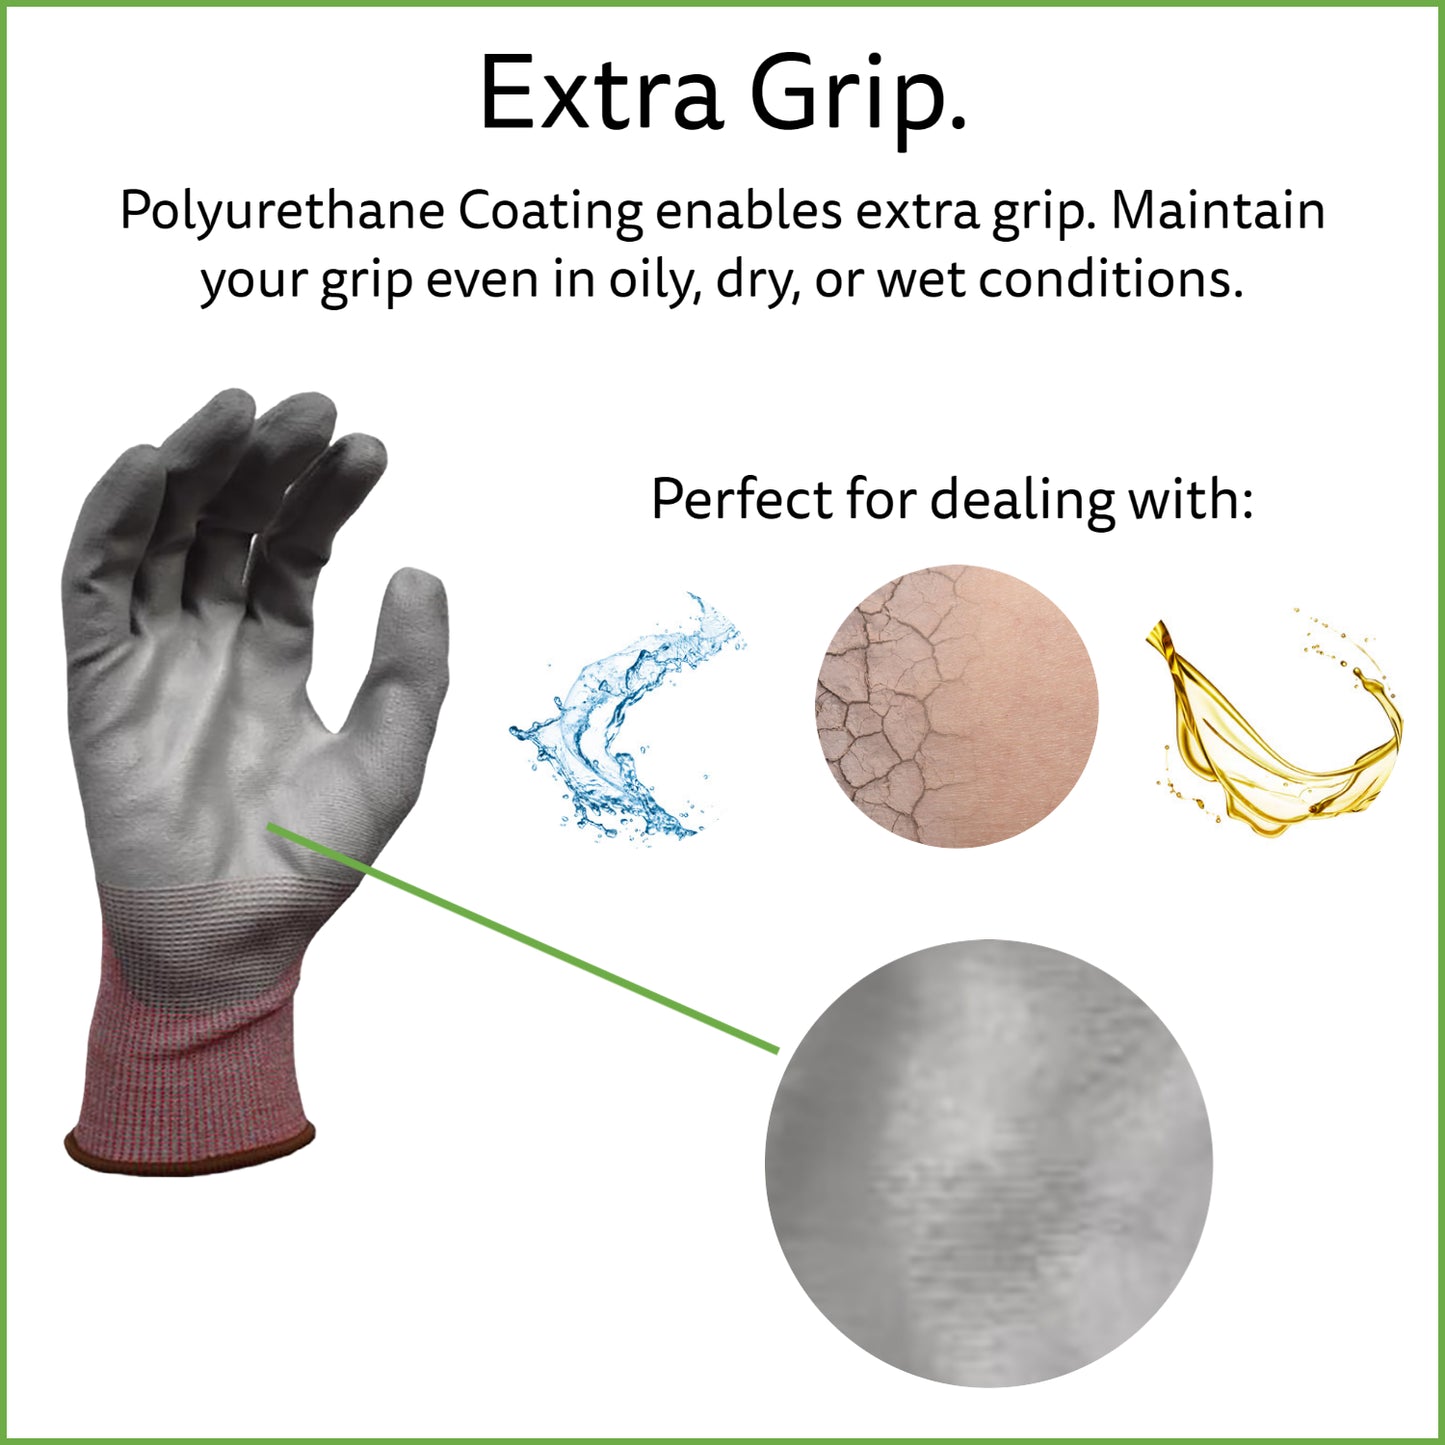 HPPG Cut-Resistant Gloves, ANSI Cut Level A4